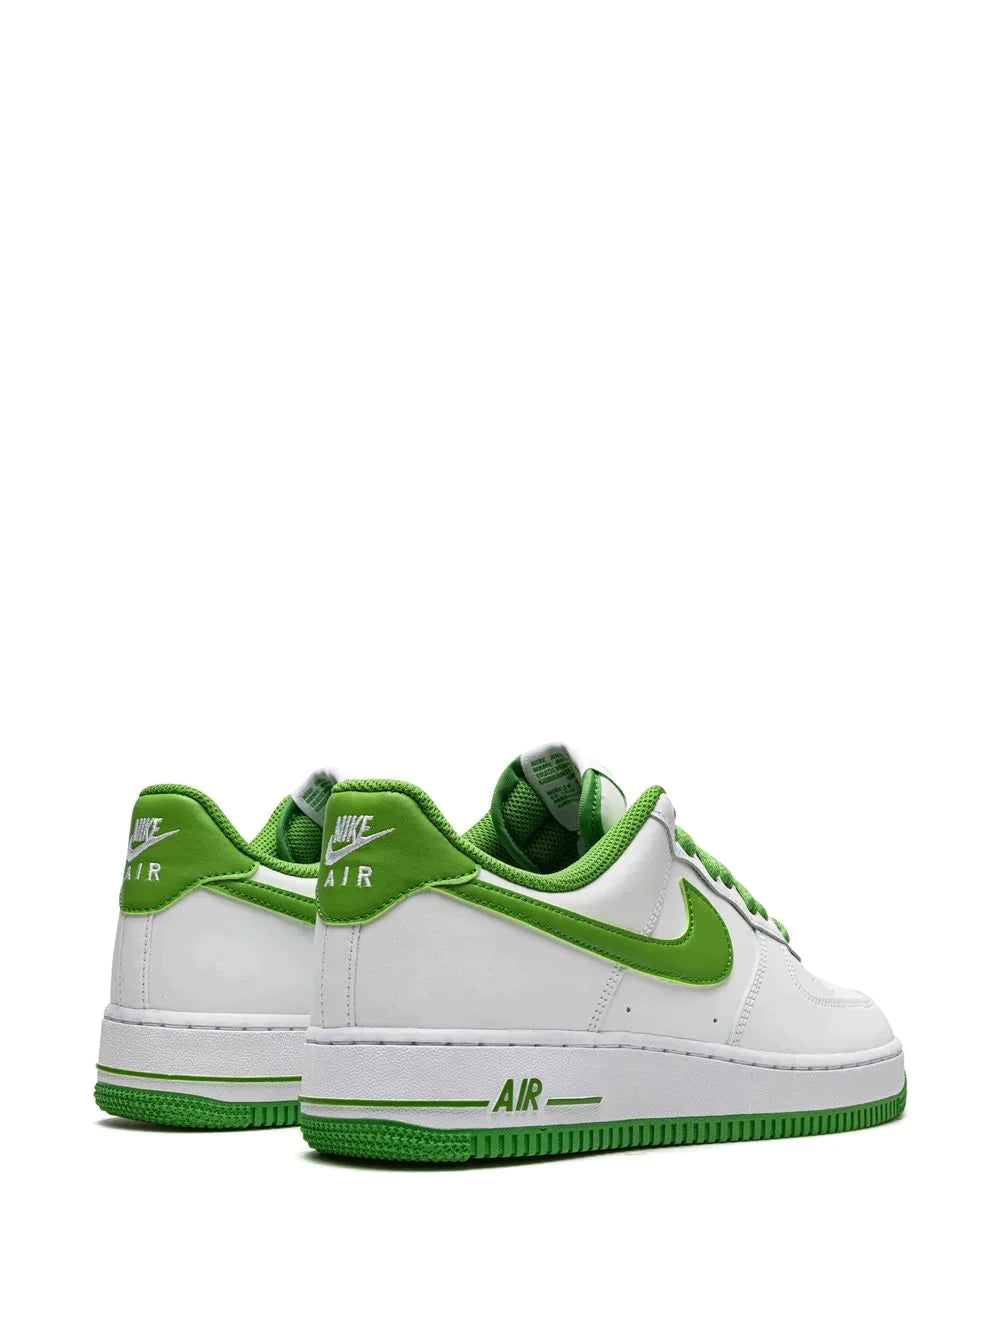 Nike Air Force 1 - Chlorophyll